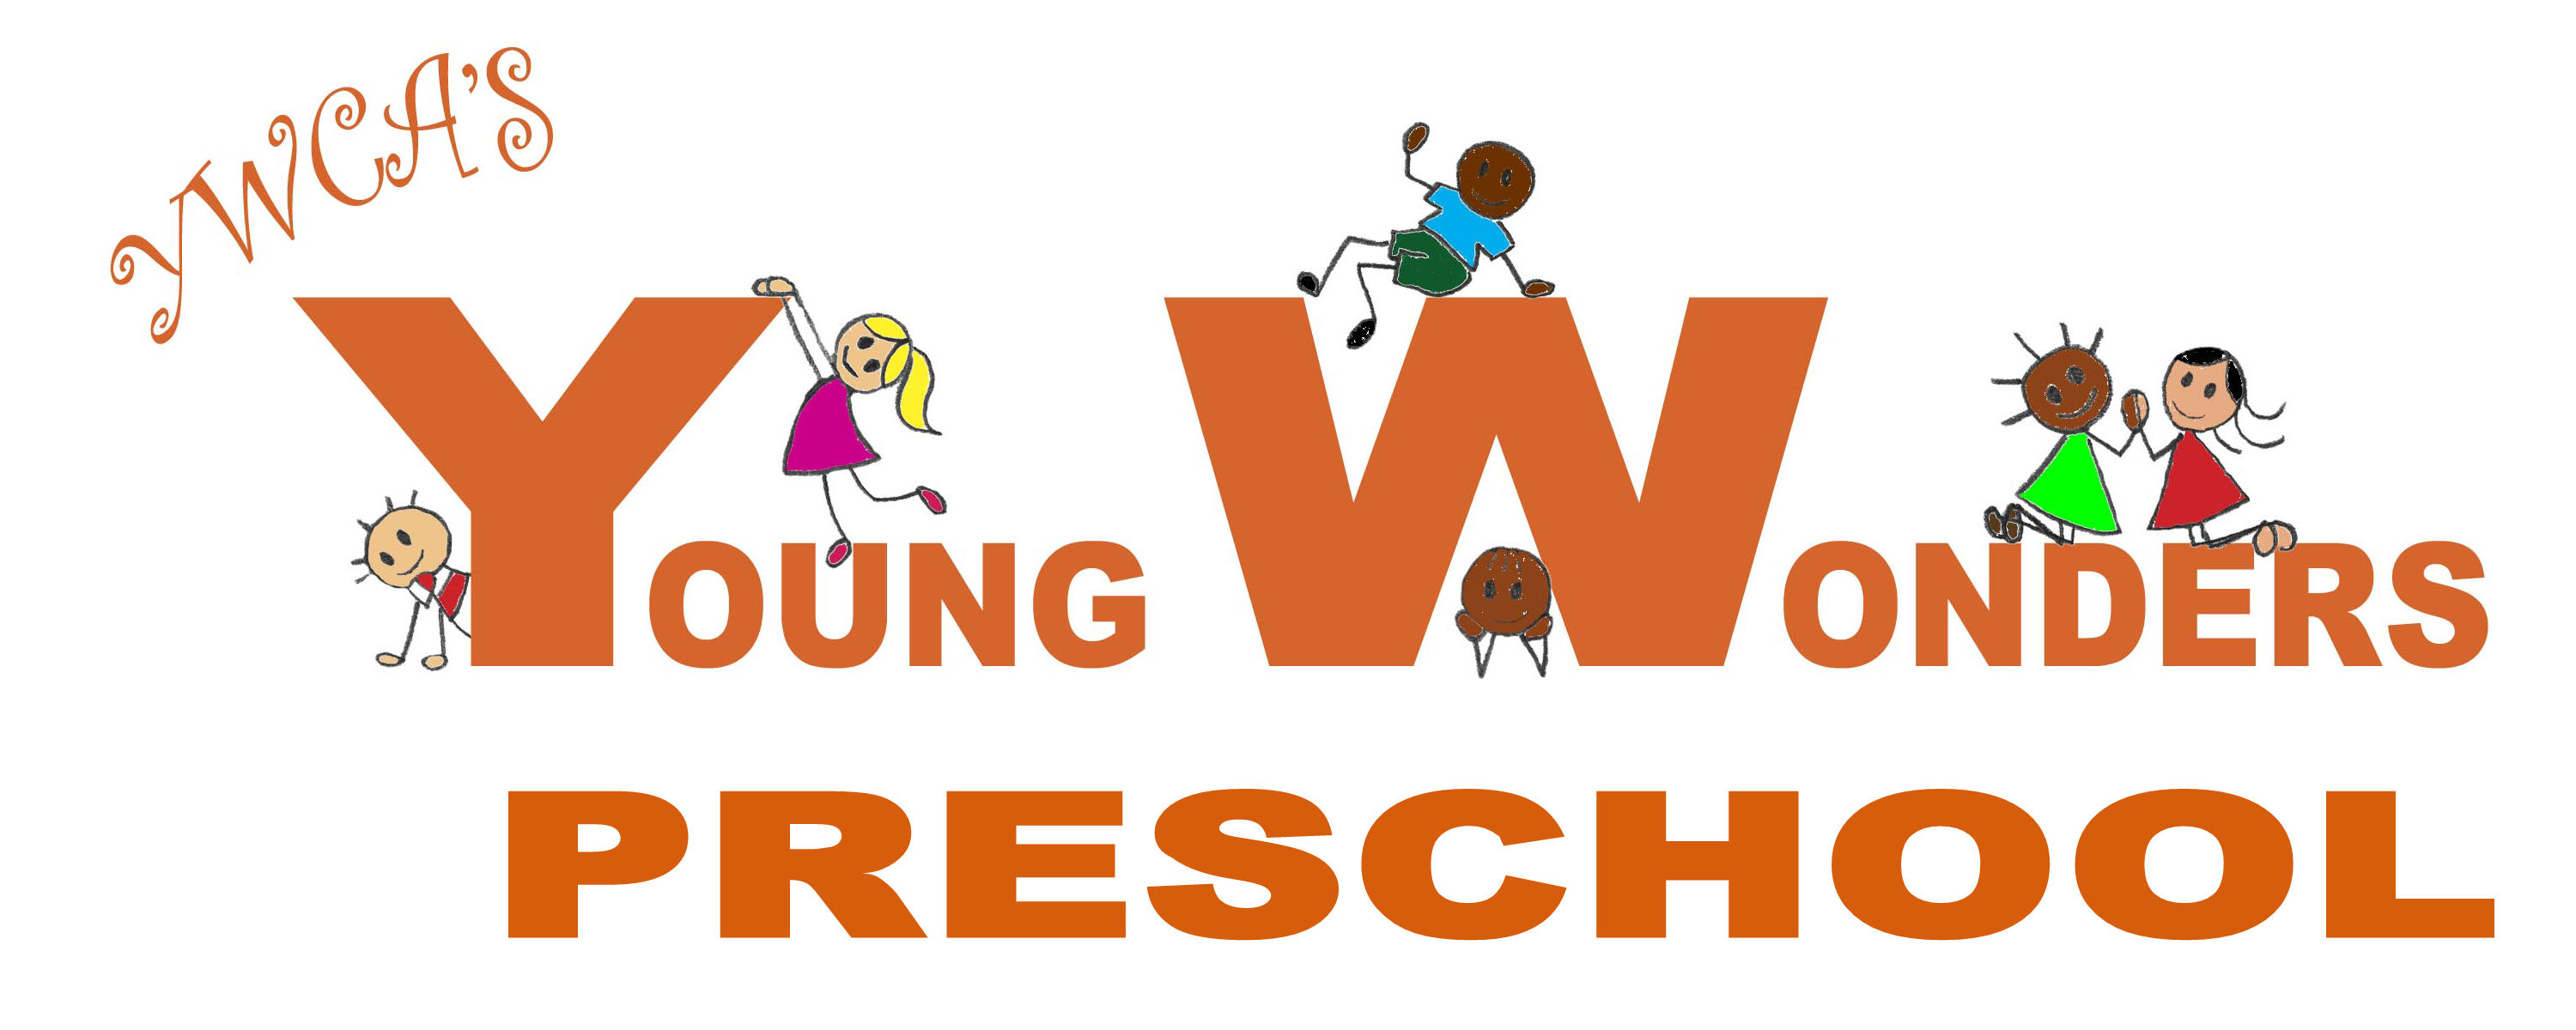 YWCA's Young Wonders Preschool